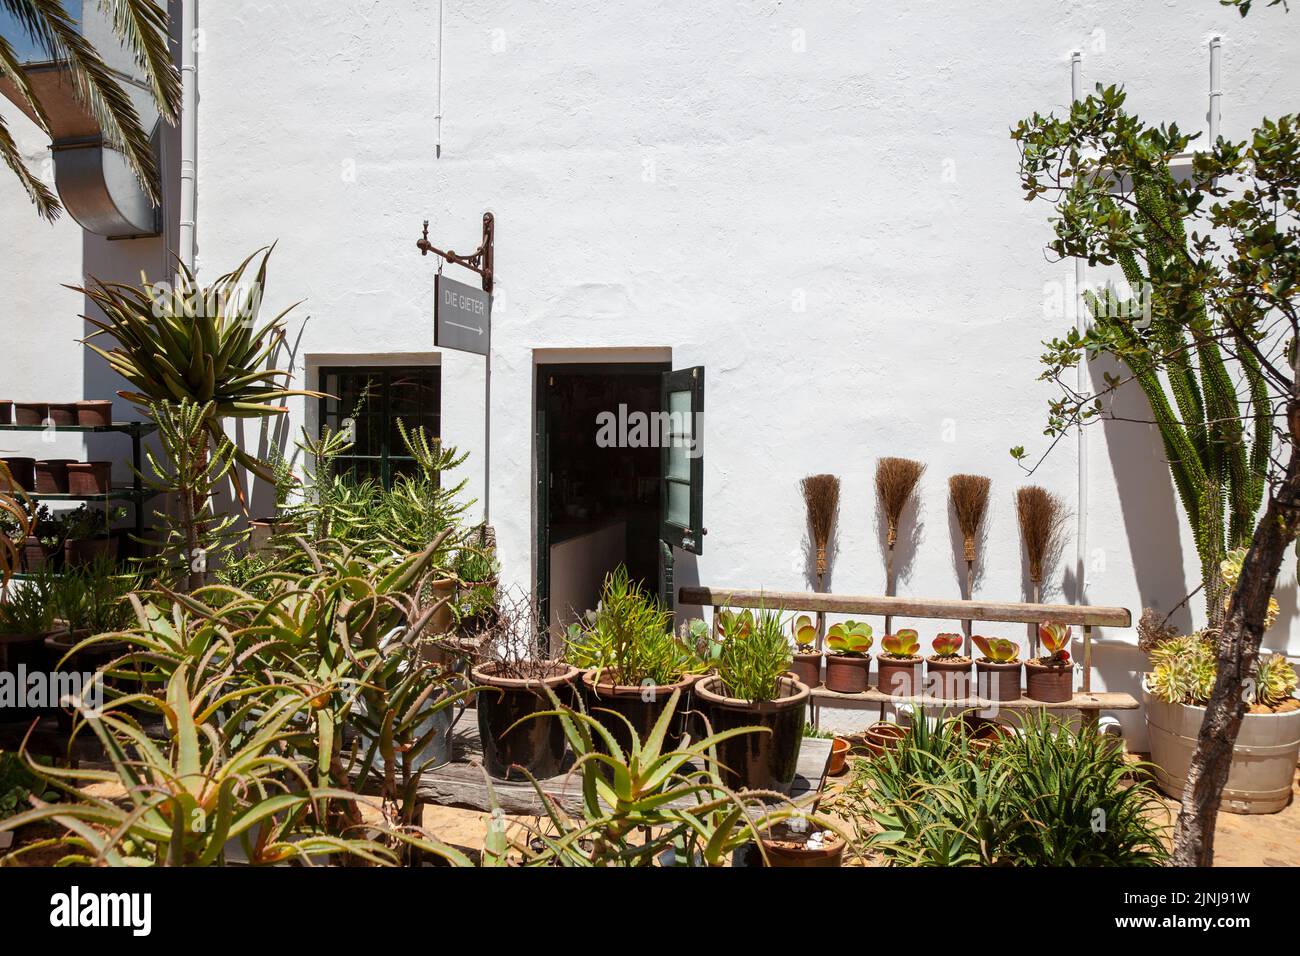 Die Gieter Botanical Decor Store at Handelshuis in Simondium, Western Cape - South Africa Stock Photo